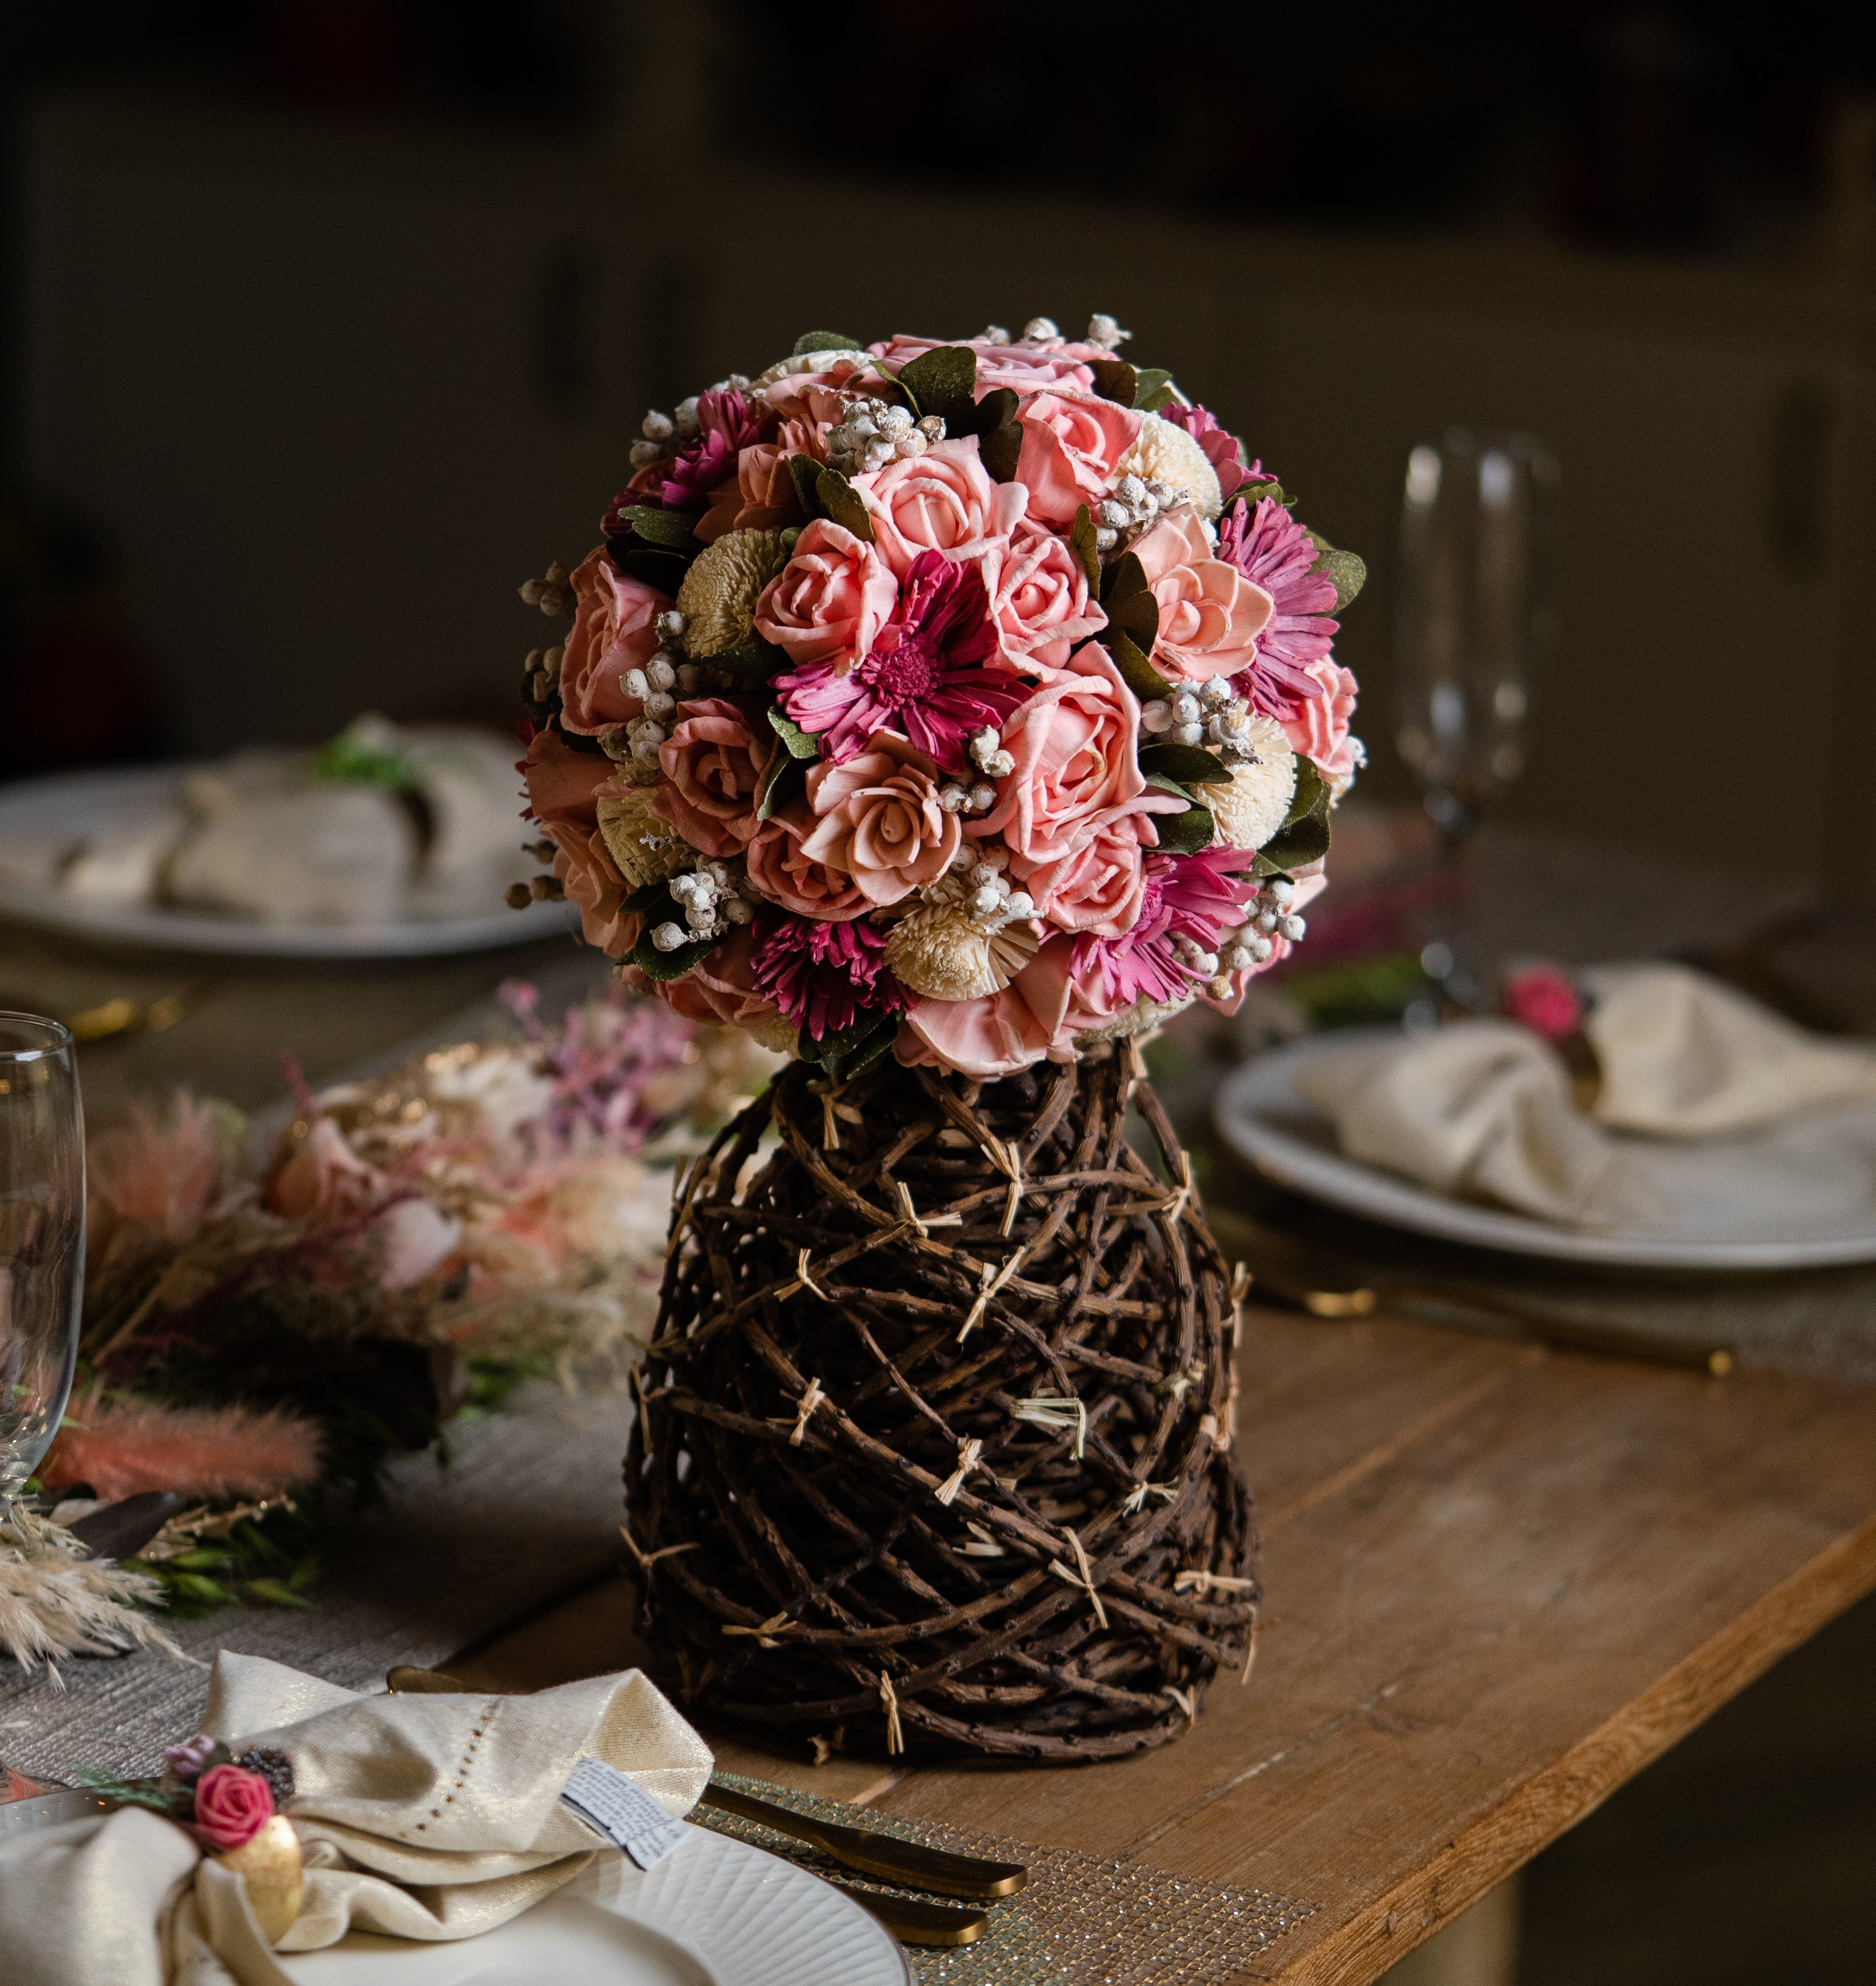 22 Stunning Ways Maeva's Floral Boutique Can Brighten Your Wedding Decor